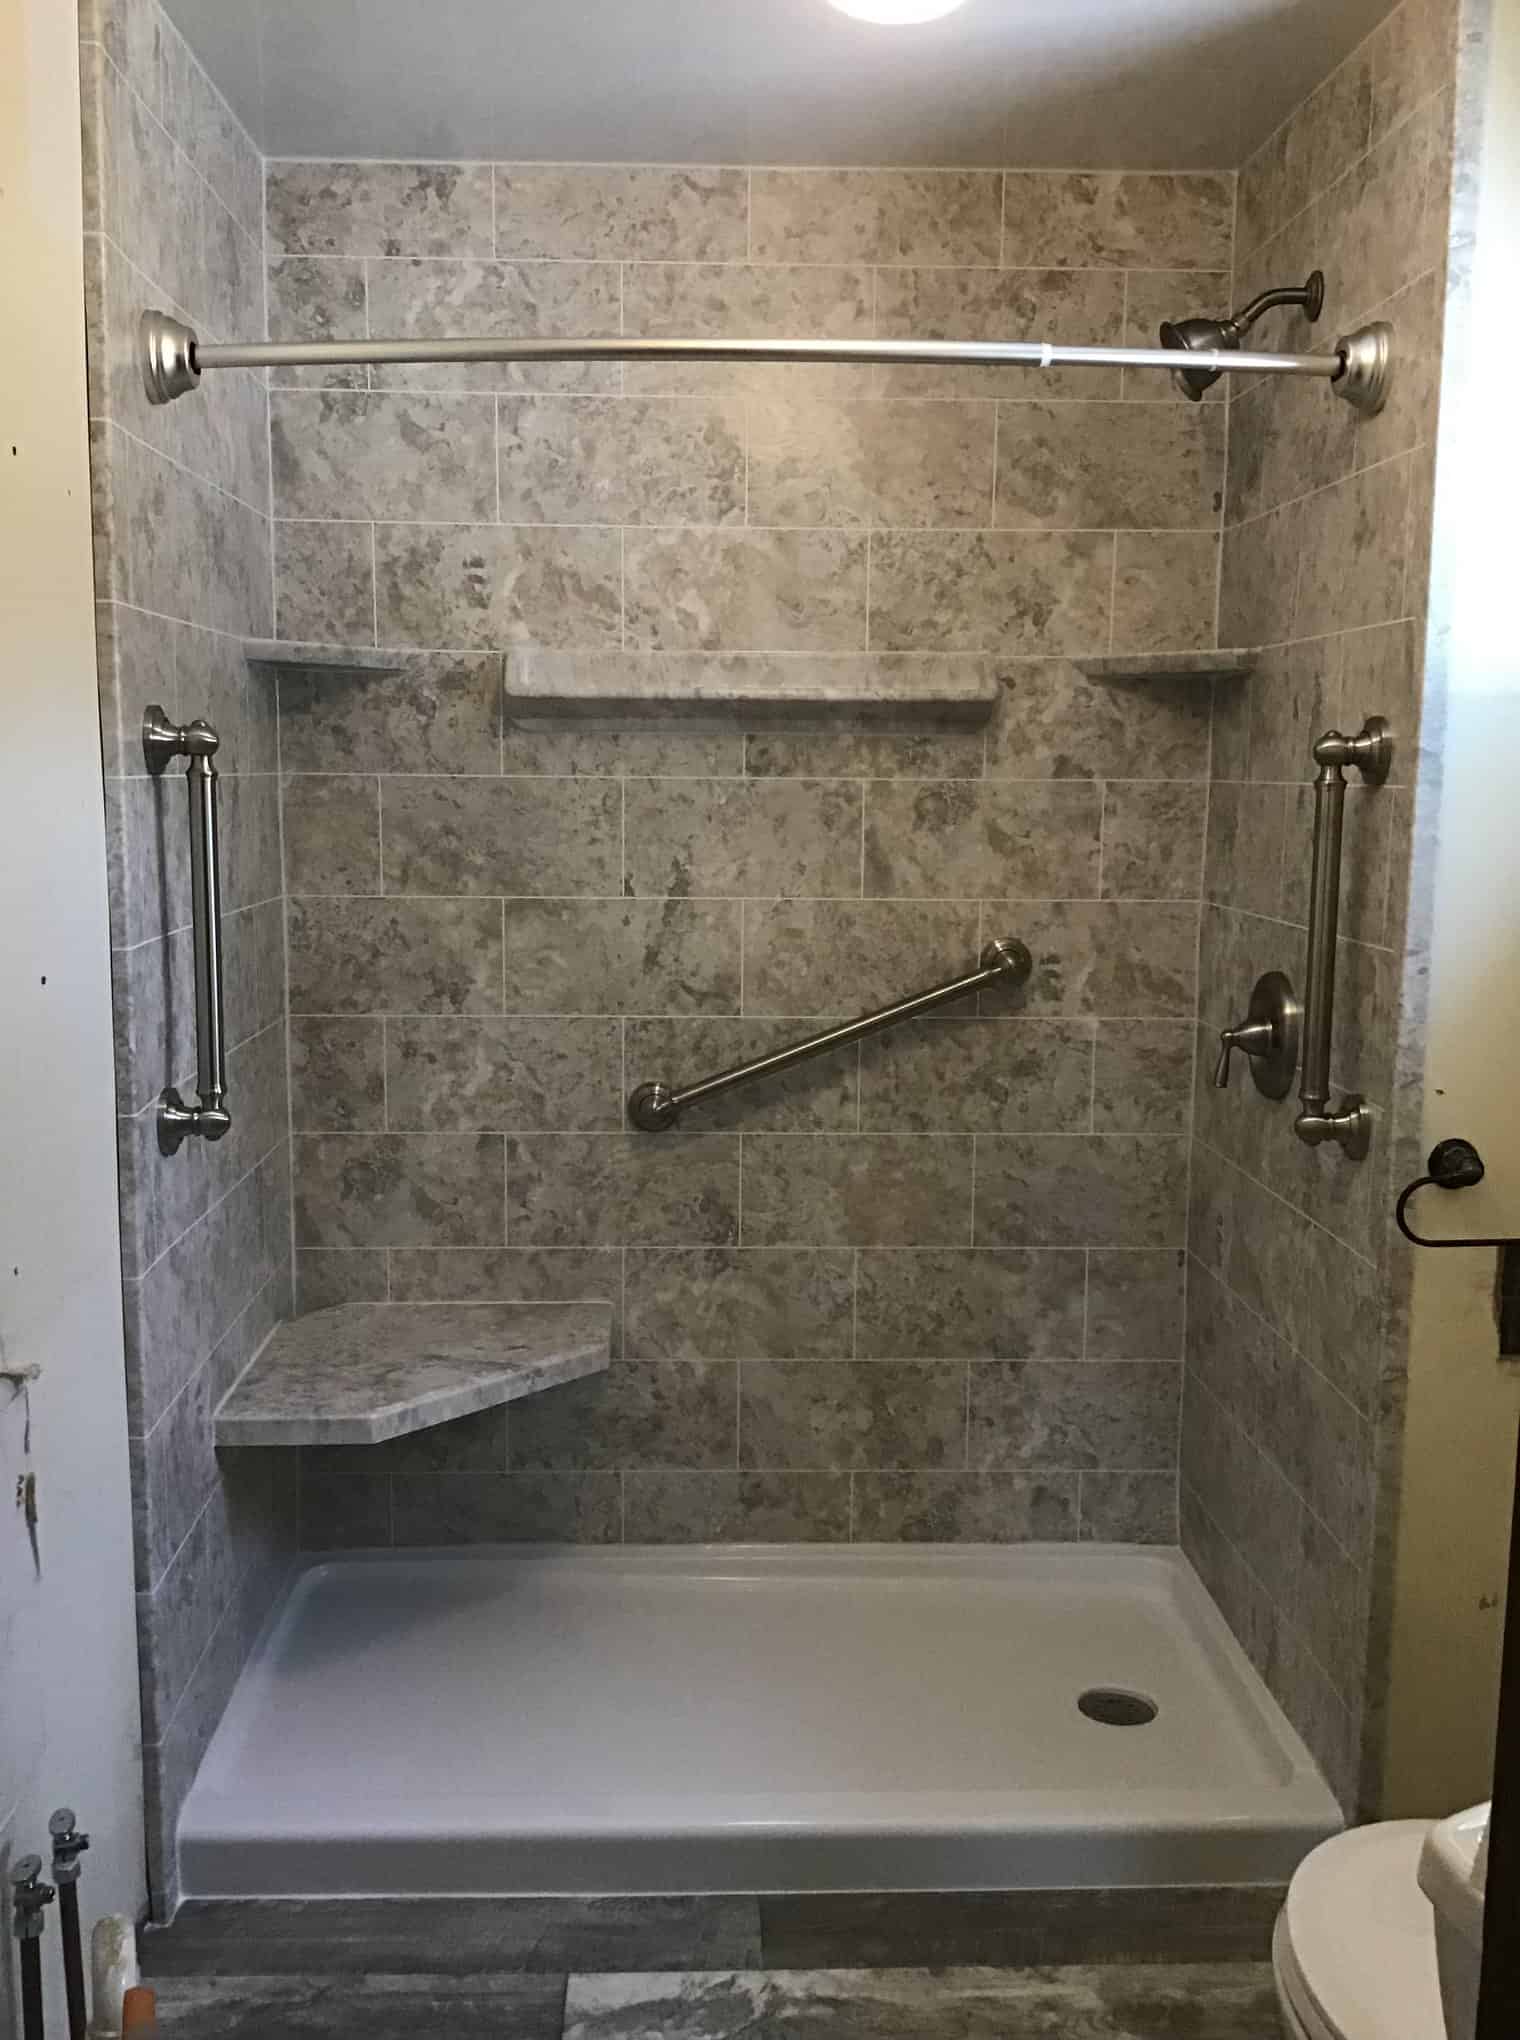 https://bathrenew.com/wp-content/uploads/2021/11/Bathroom-Shower-Accessories.jpg